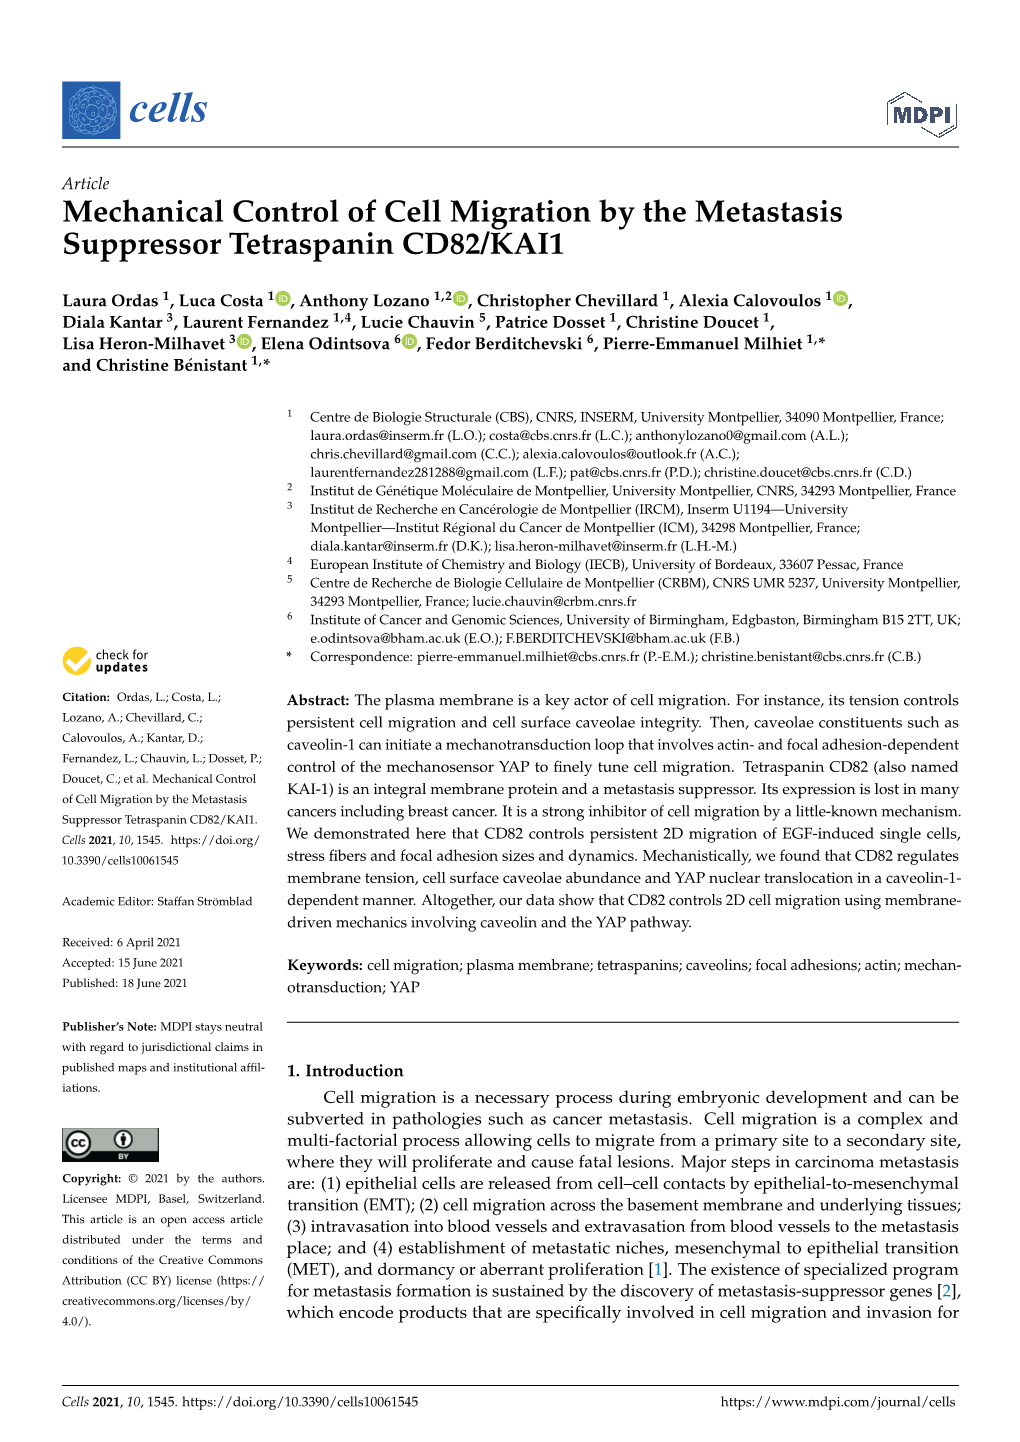 Mechanical Control of Cell Migration by the Metastasis Suppressor Tetraspanin CD82/KAI1